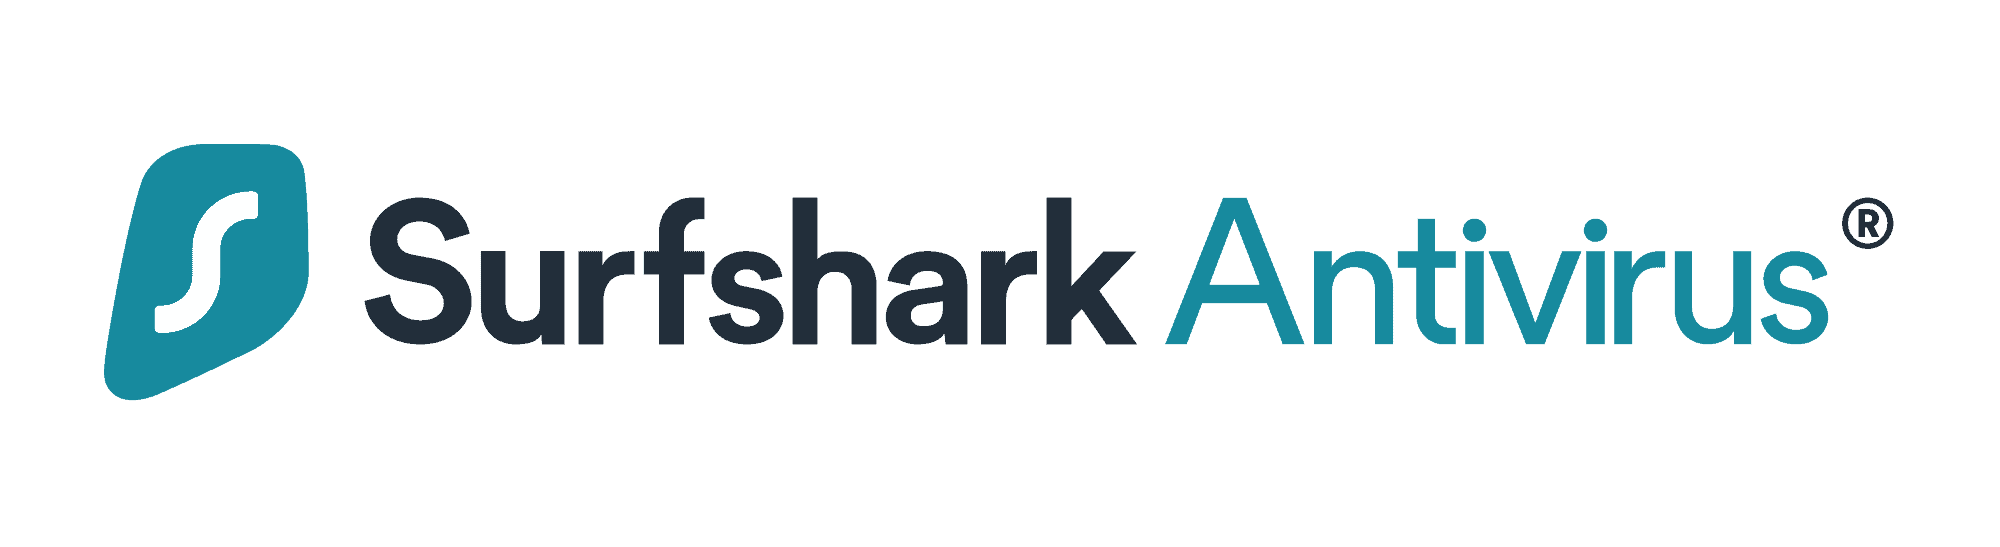 Surfshark Antivirus logo - Product Logo